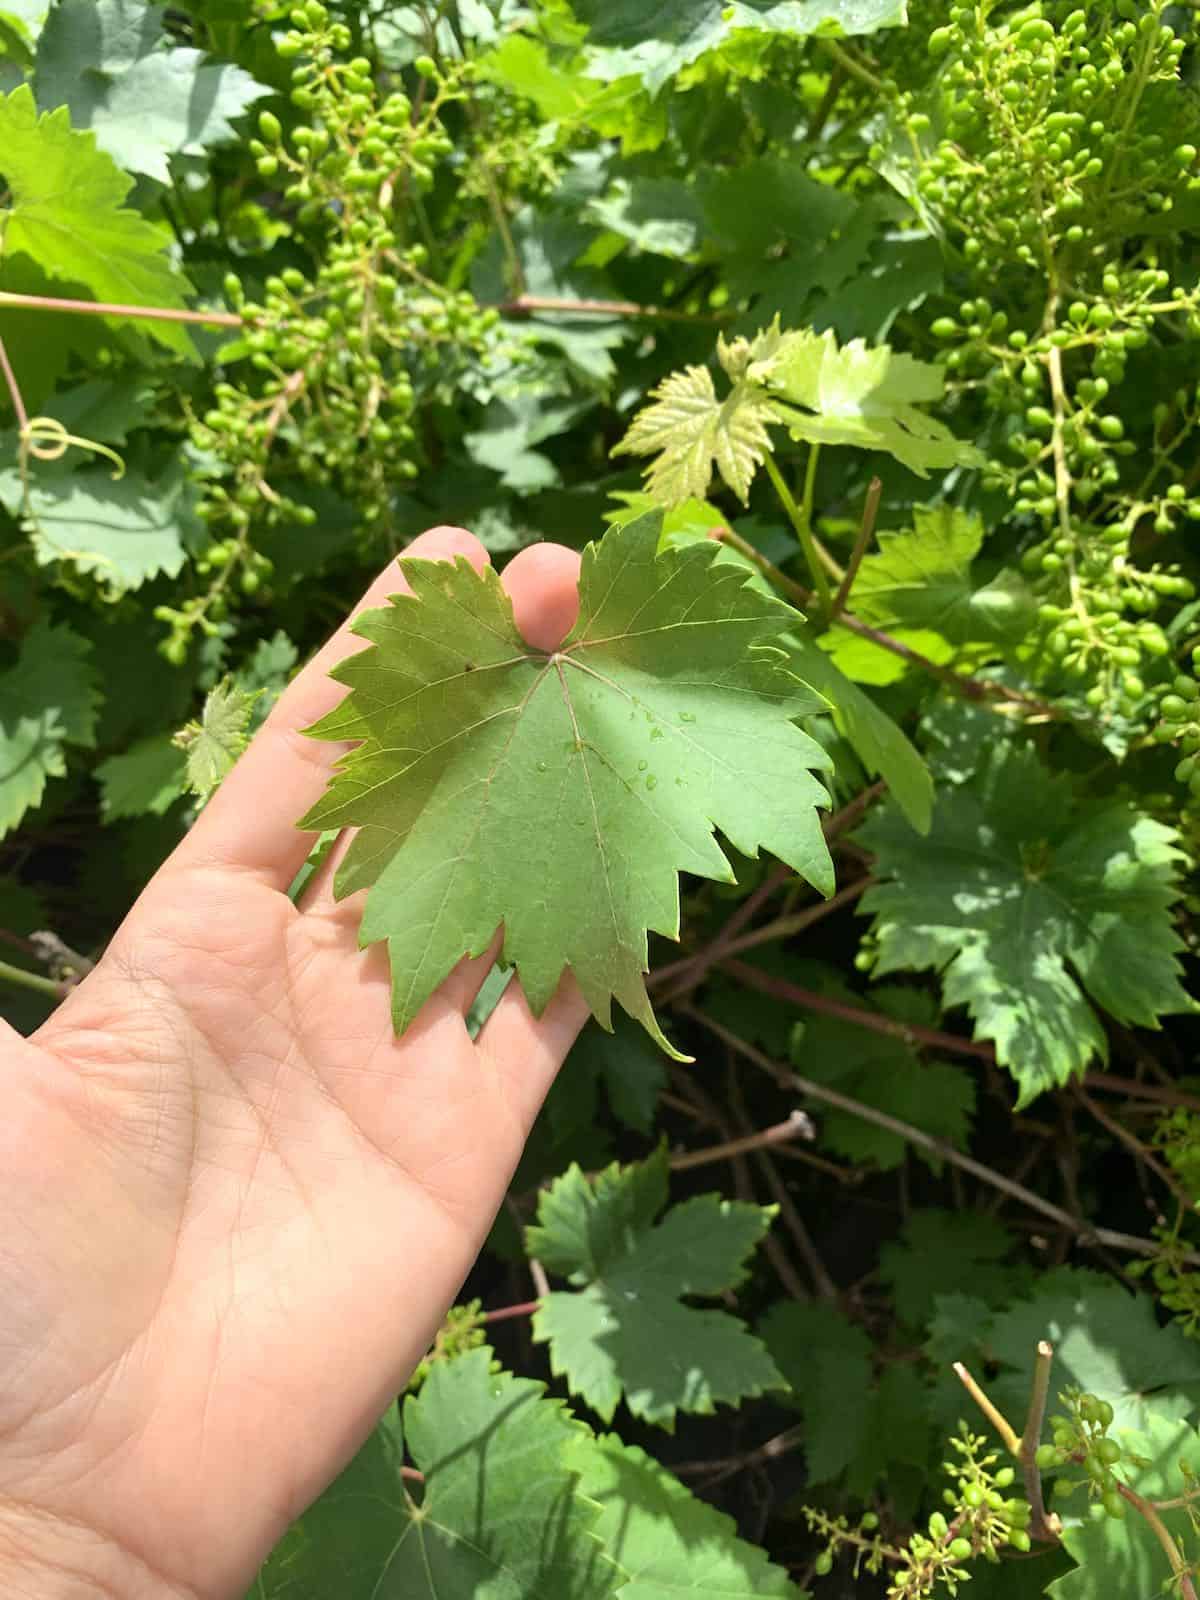 Showing a grape leave on a grape vine